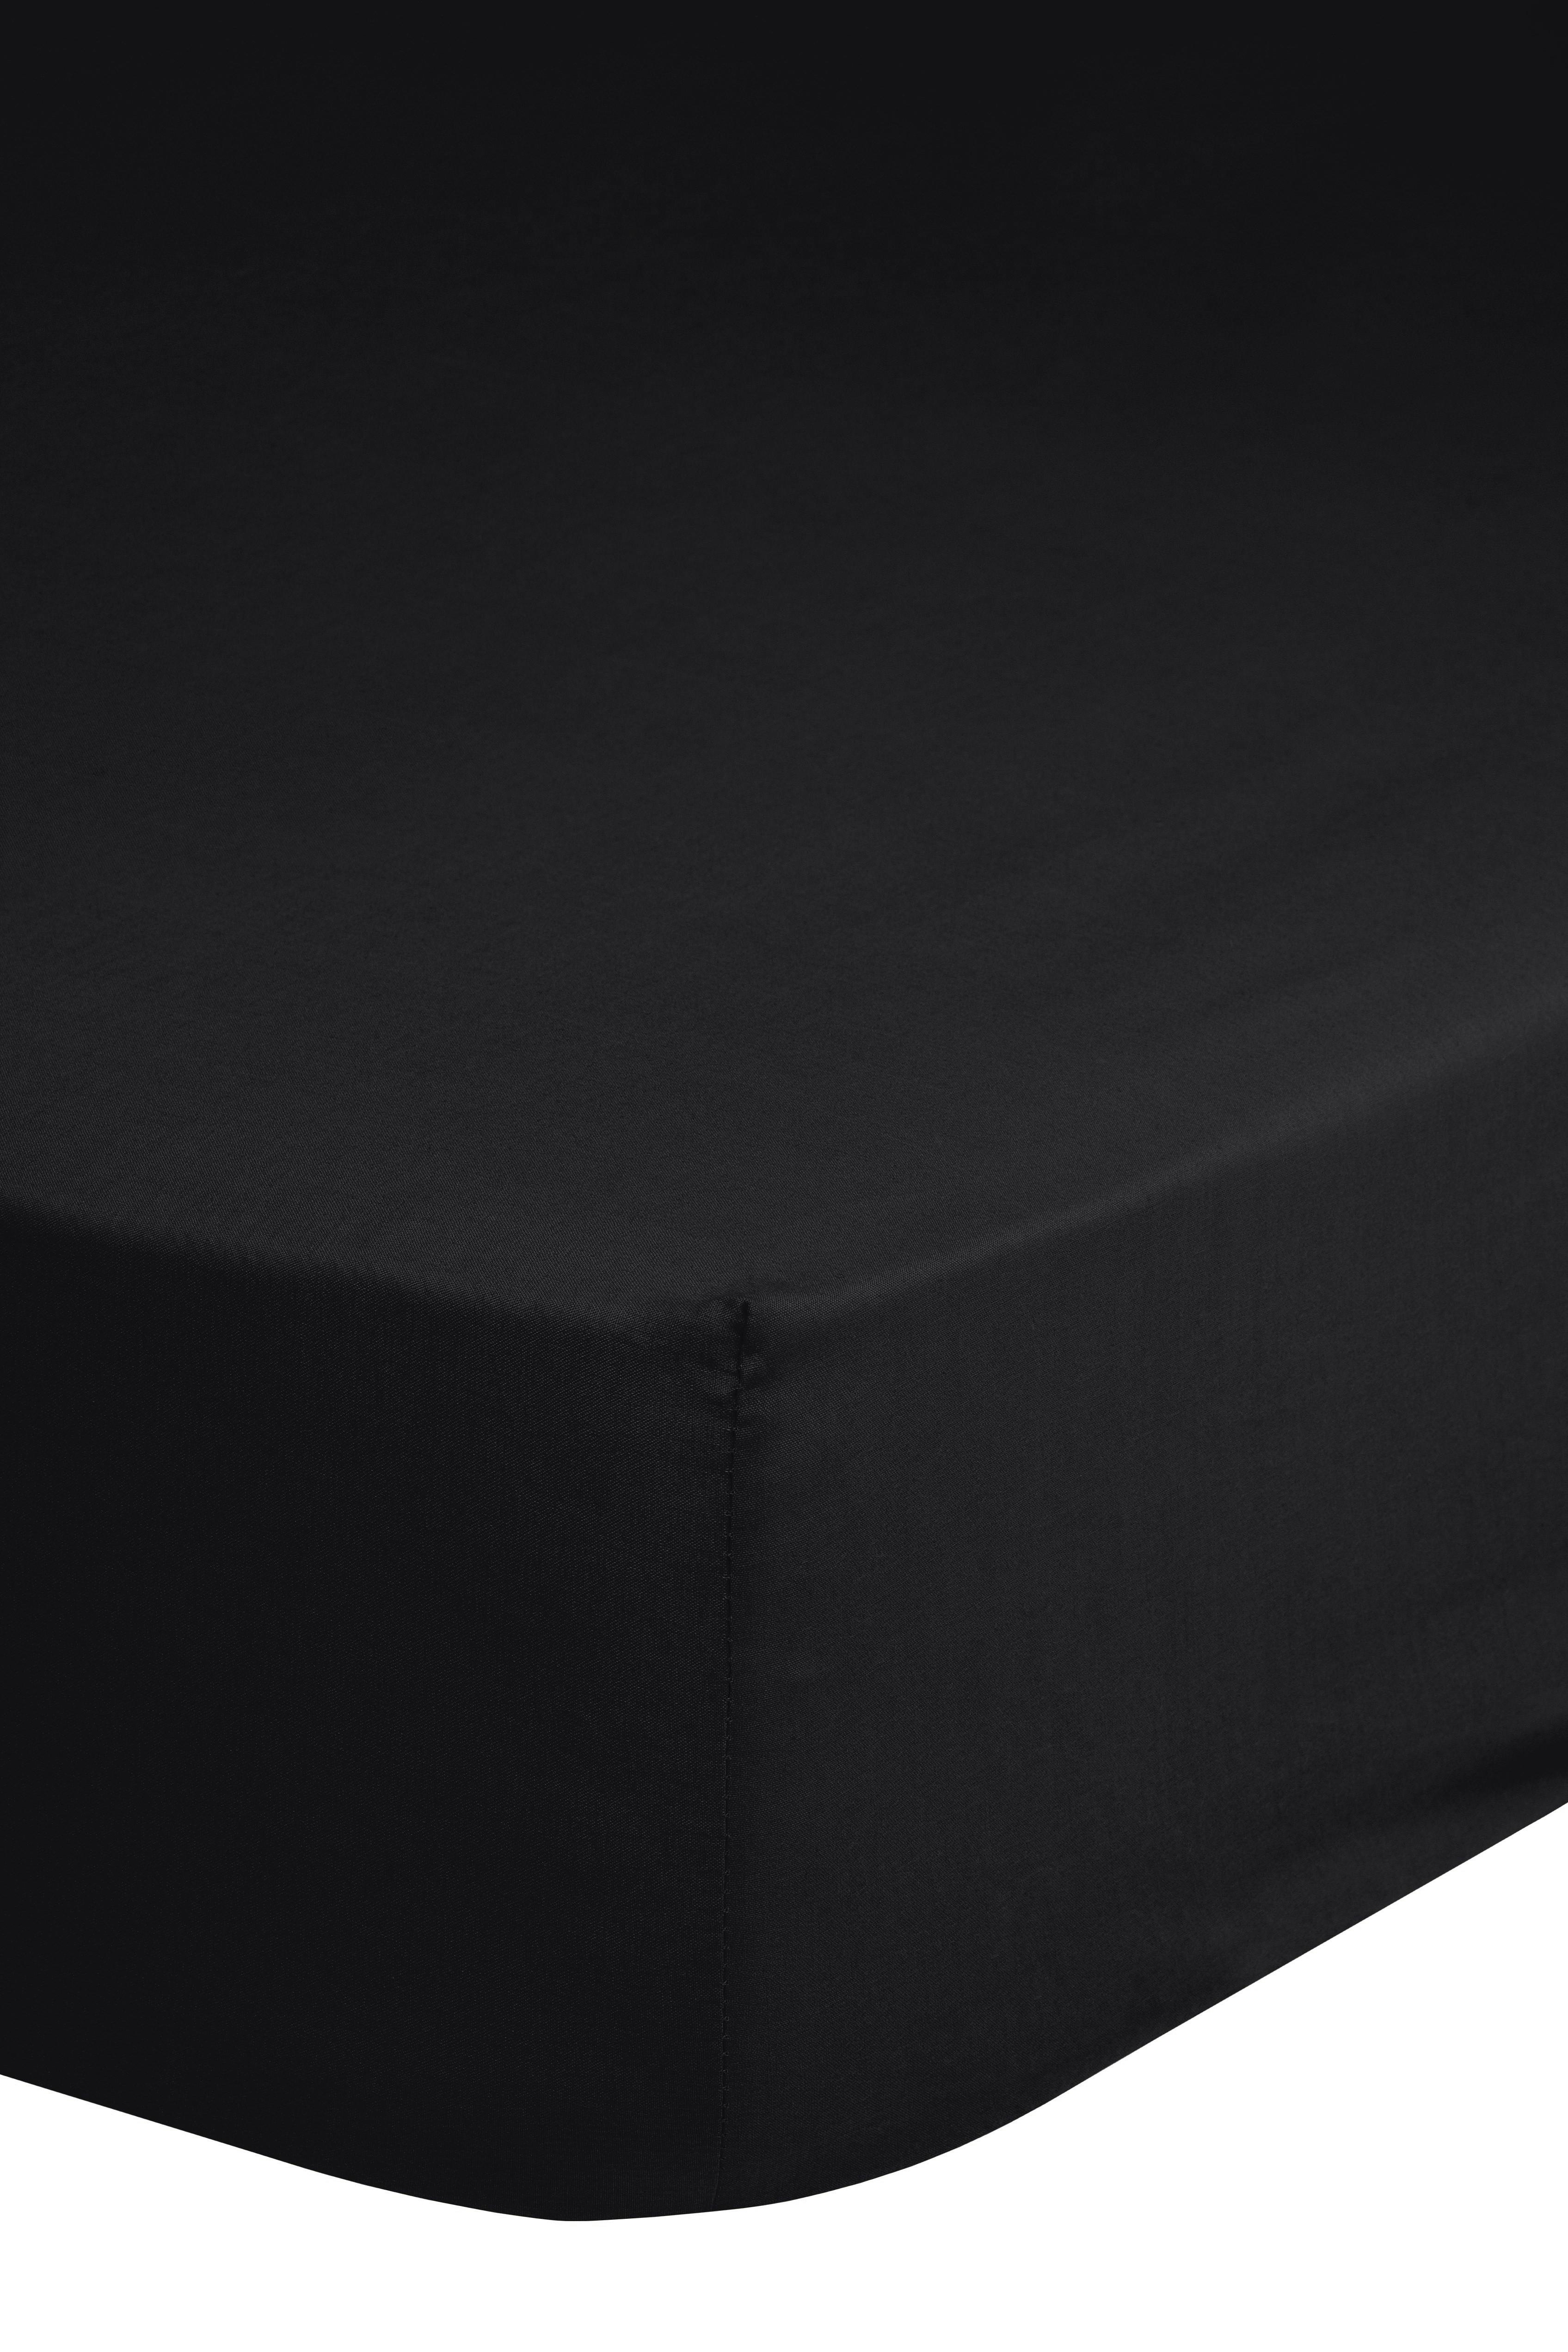 Elastické Prostěradlo Jersey 200x220cm Bavlna - černá, Basics, textil (200/220cm) - MID.YOU